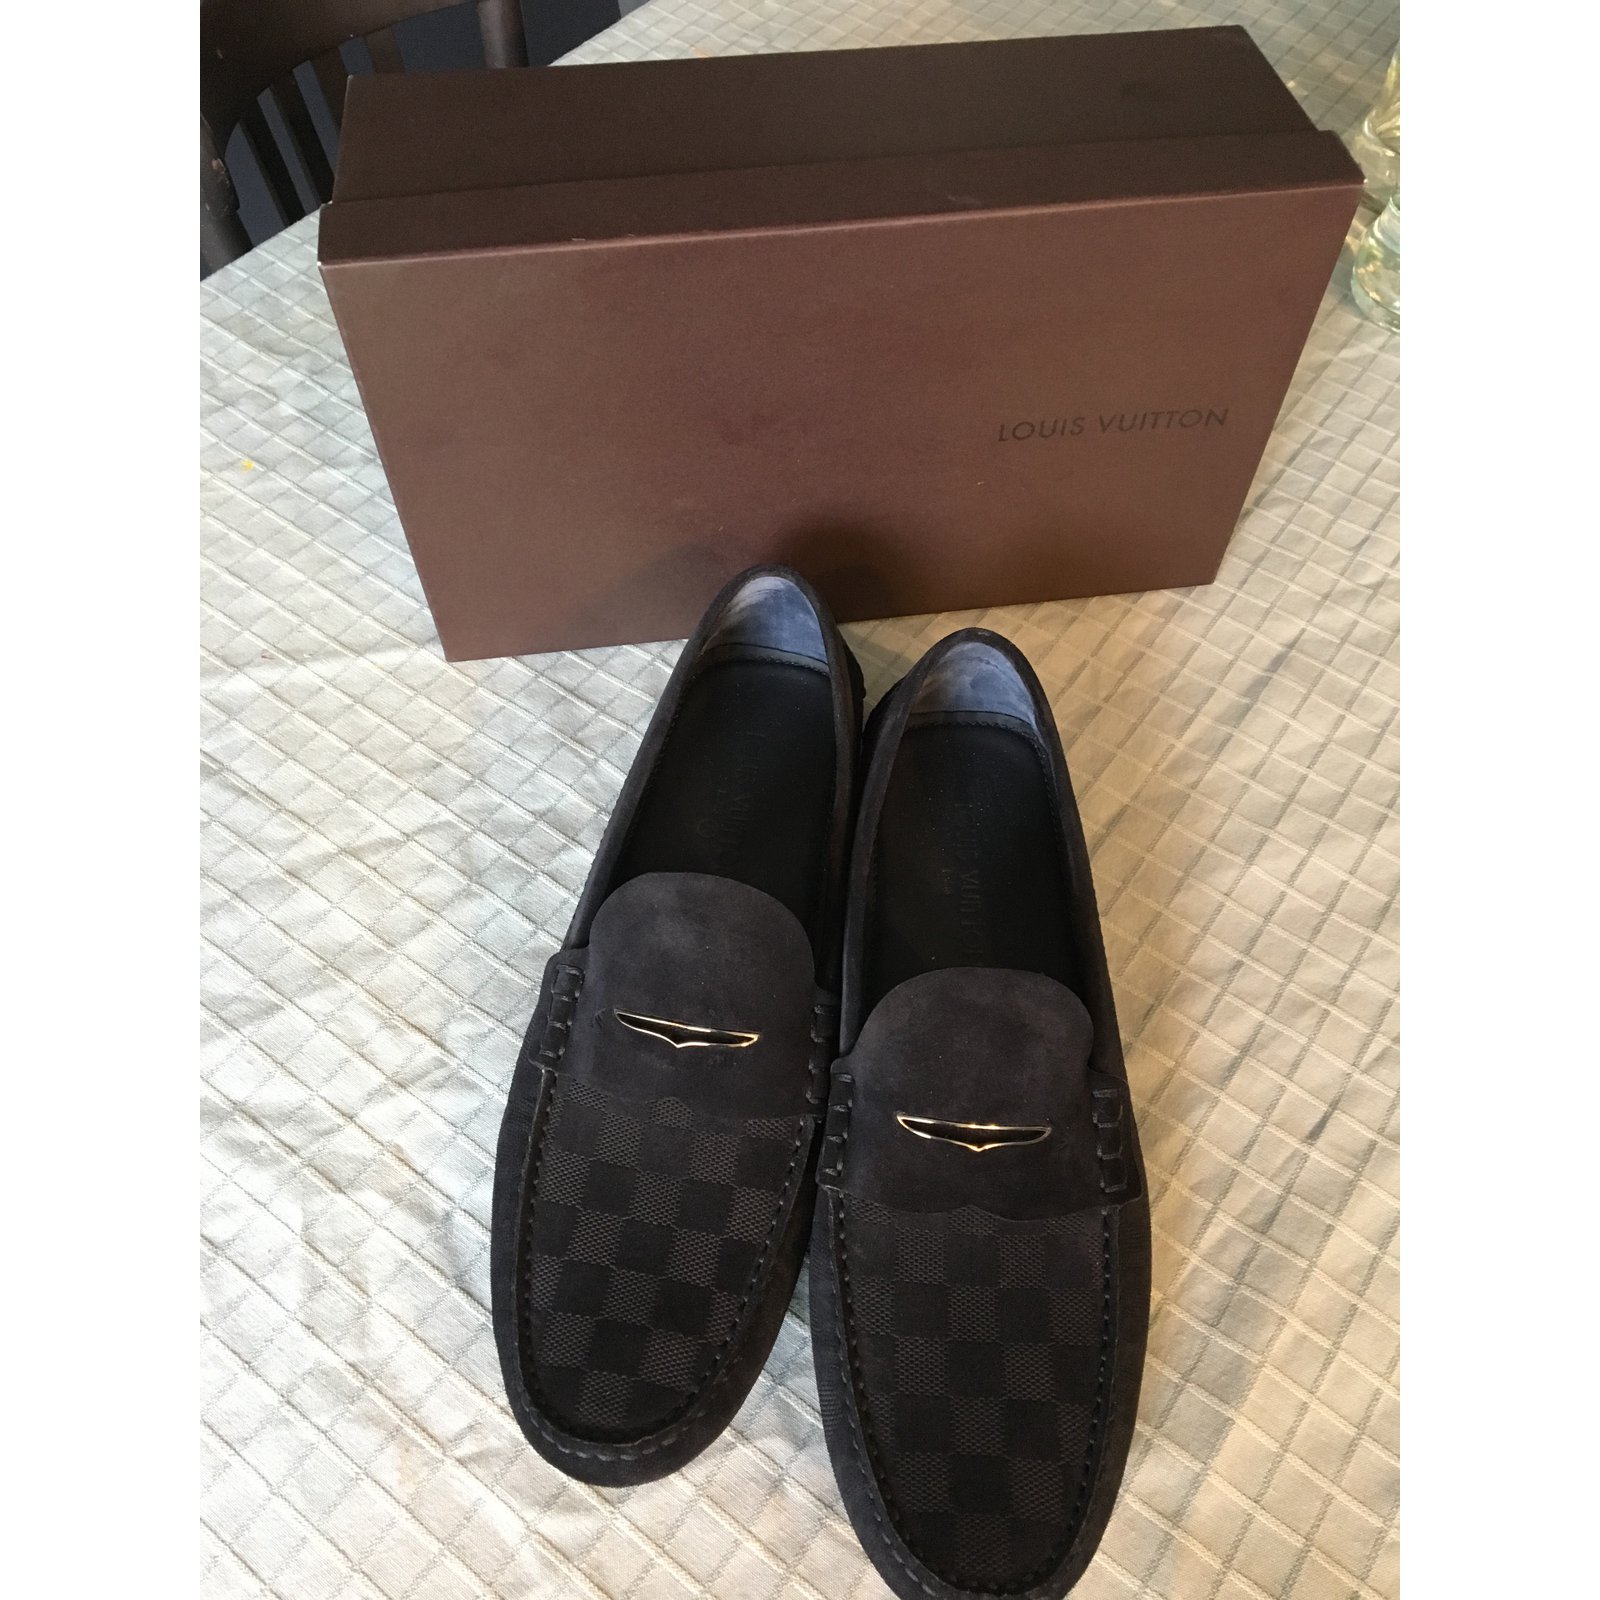 Louis Vuitton Navy Blue Suede slip on shoe Loafers 9UK 10US 43EU ***